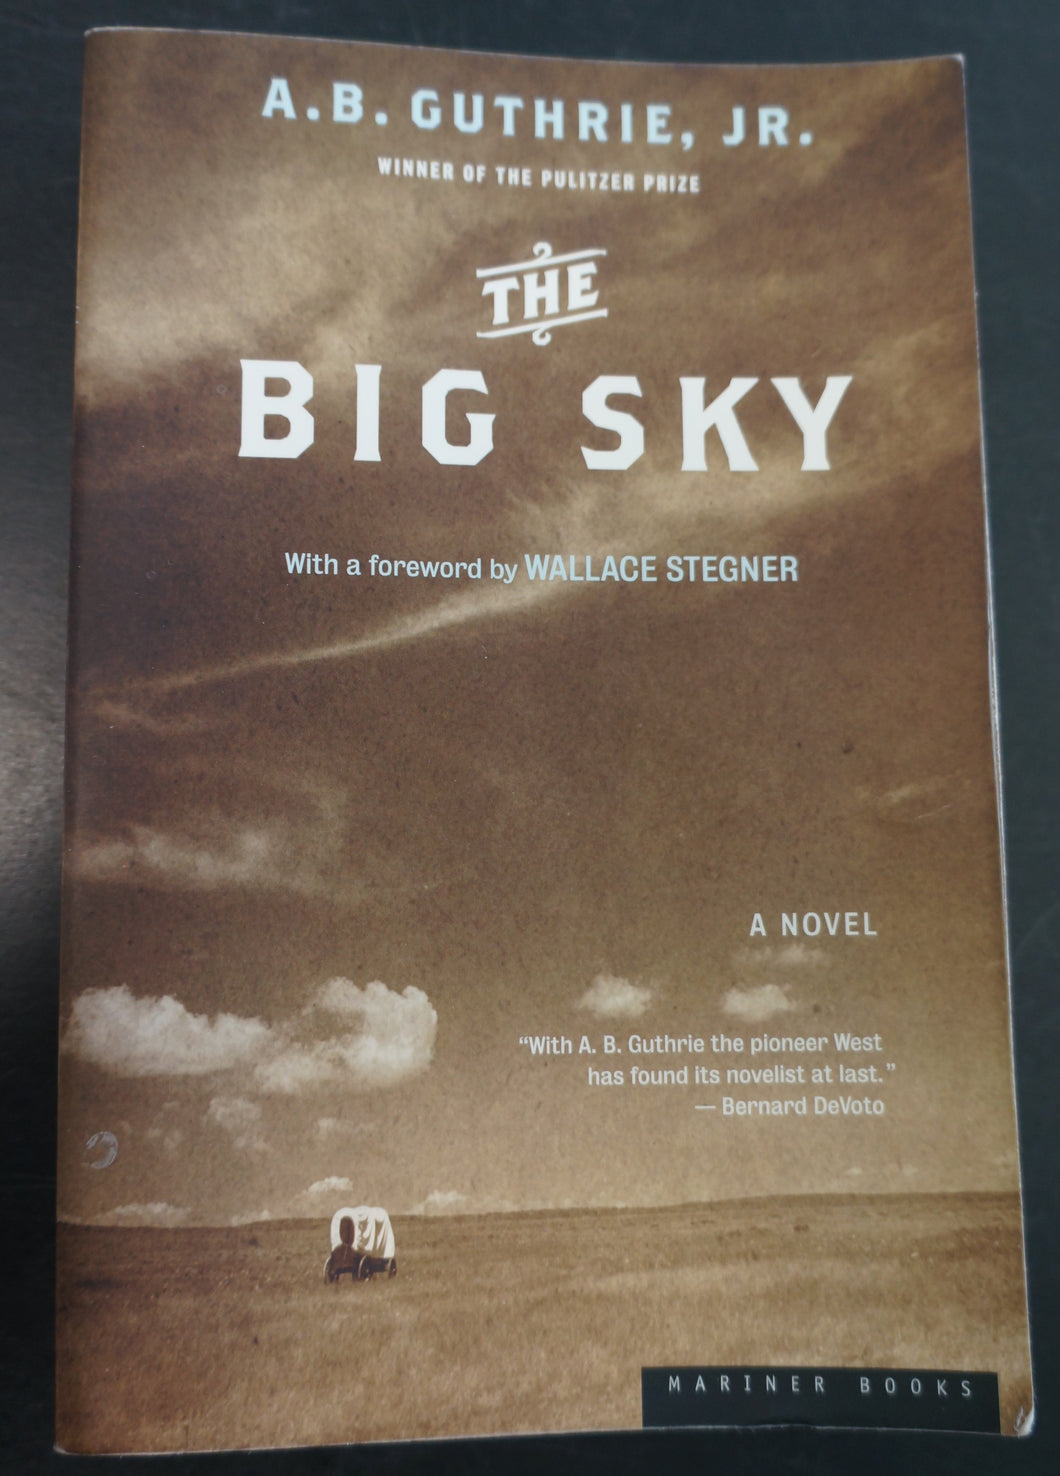 The Big Sky by A.B. Guthrie, Jr.